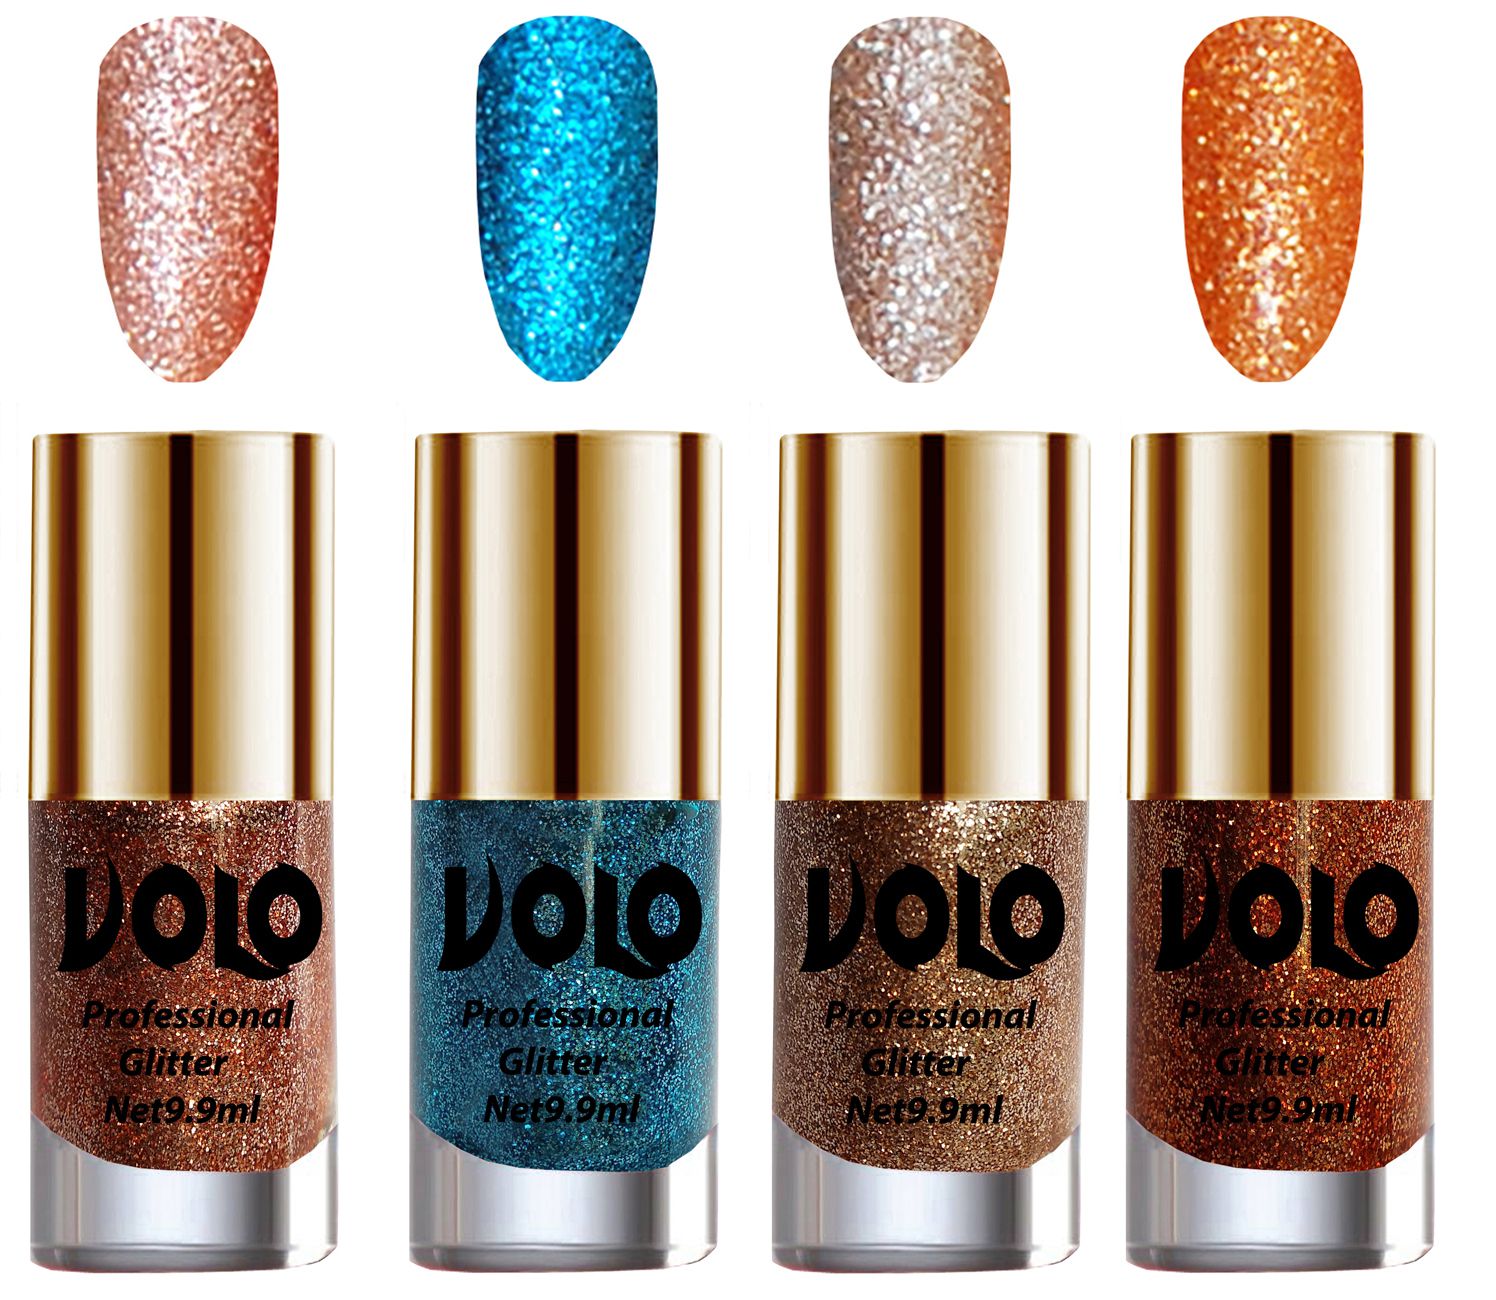     			VOLO Professionally Used Glitter Shine Nail Polish Peach,Blue,Gold Orange Pack of 4 39 mL